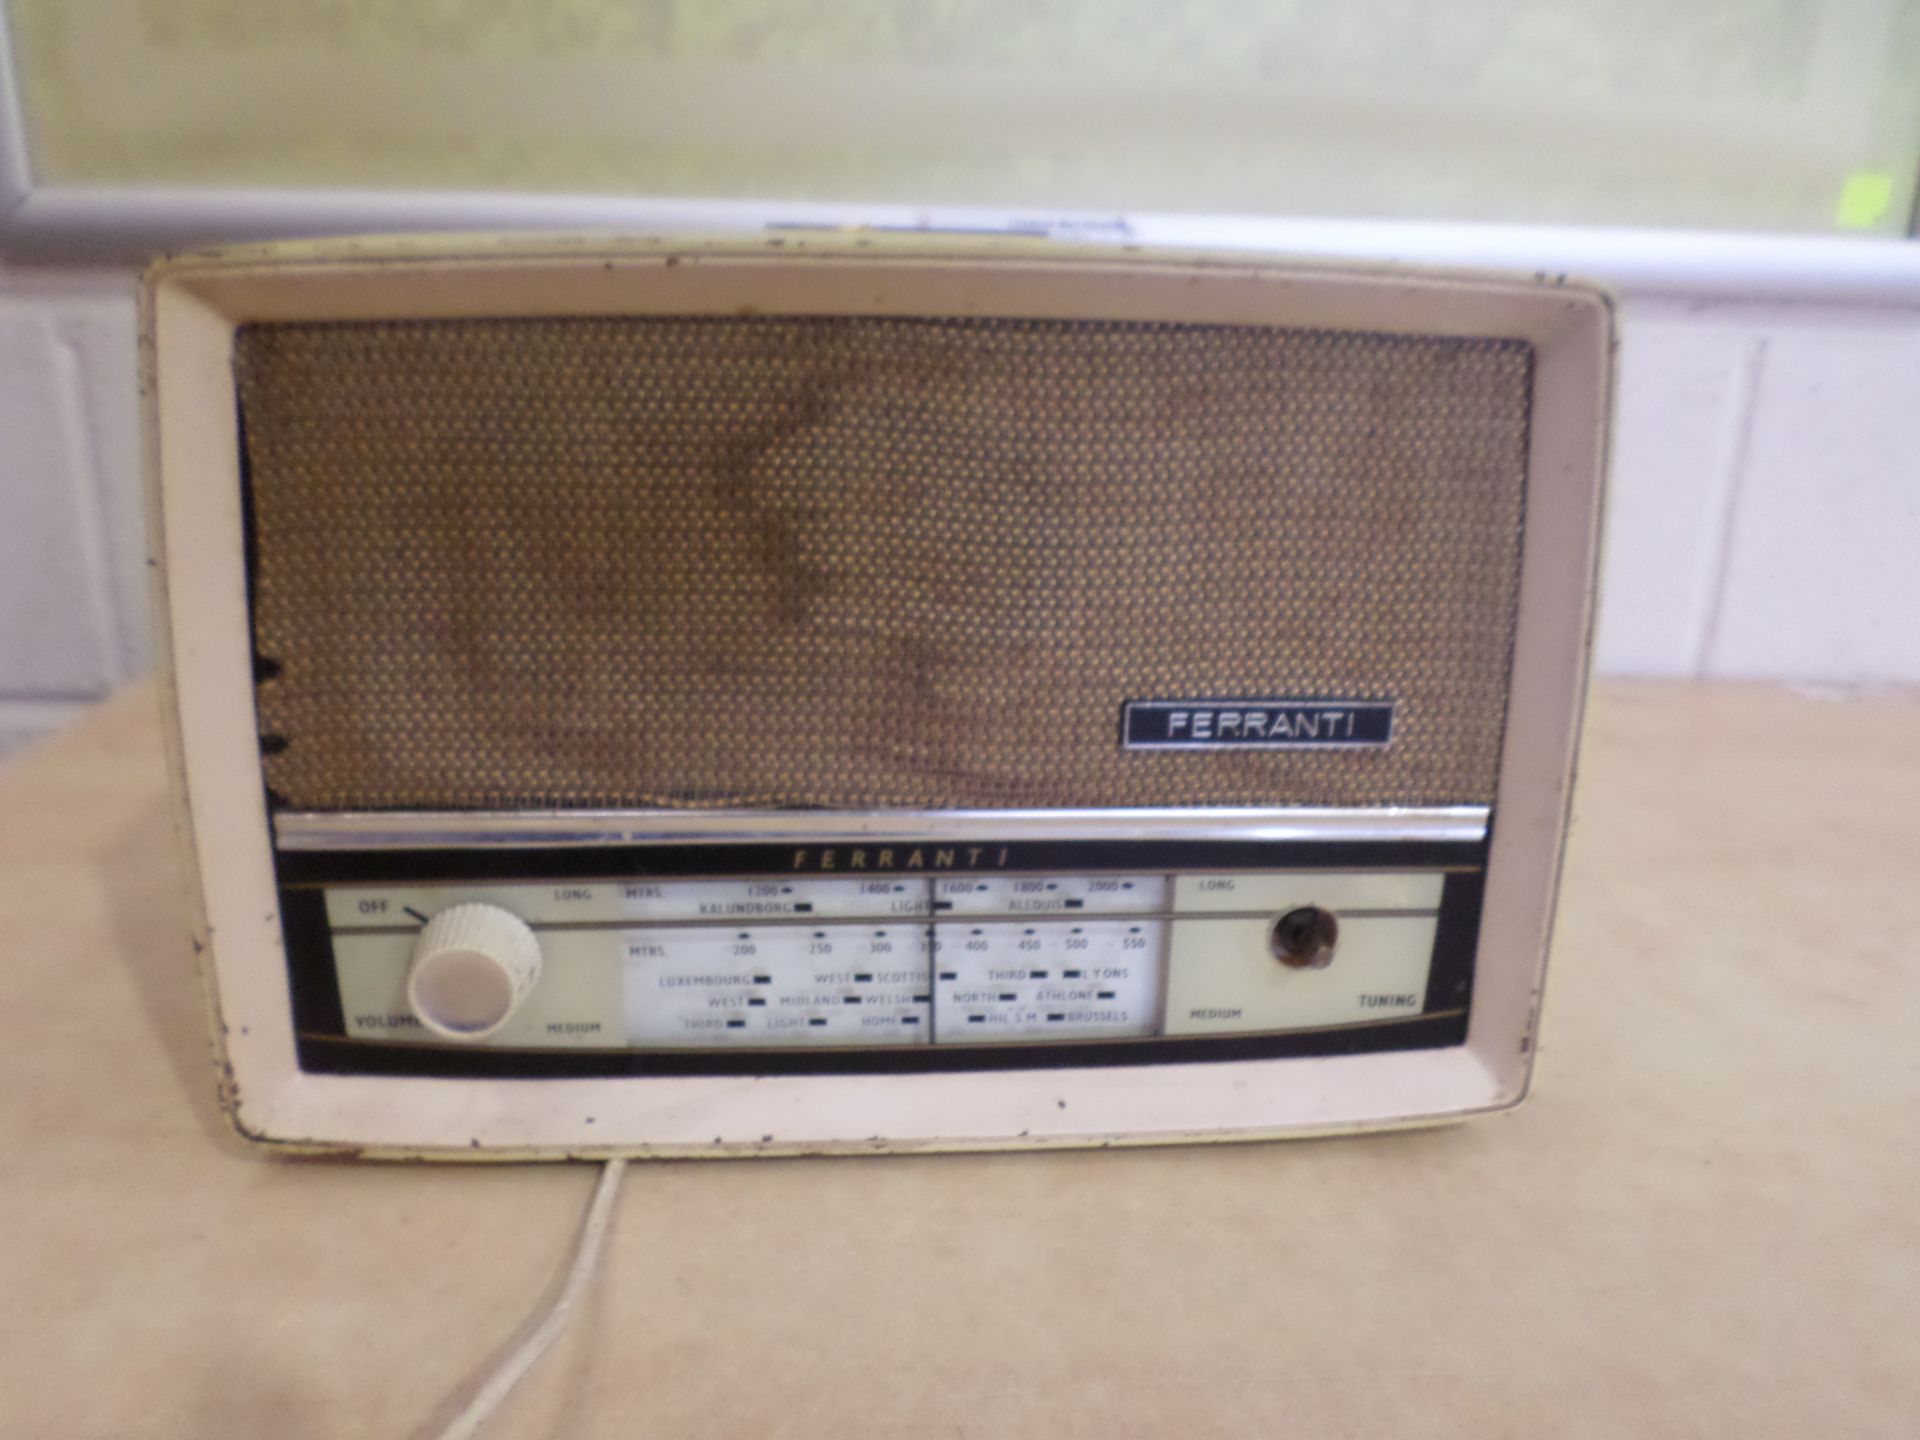 Old bakelite Ferranti radio